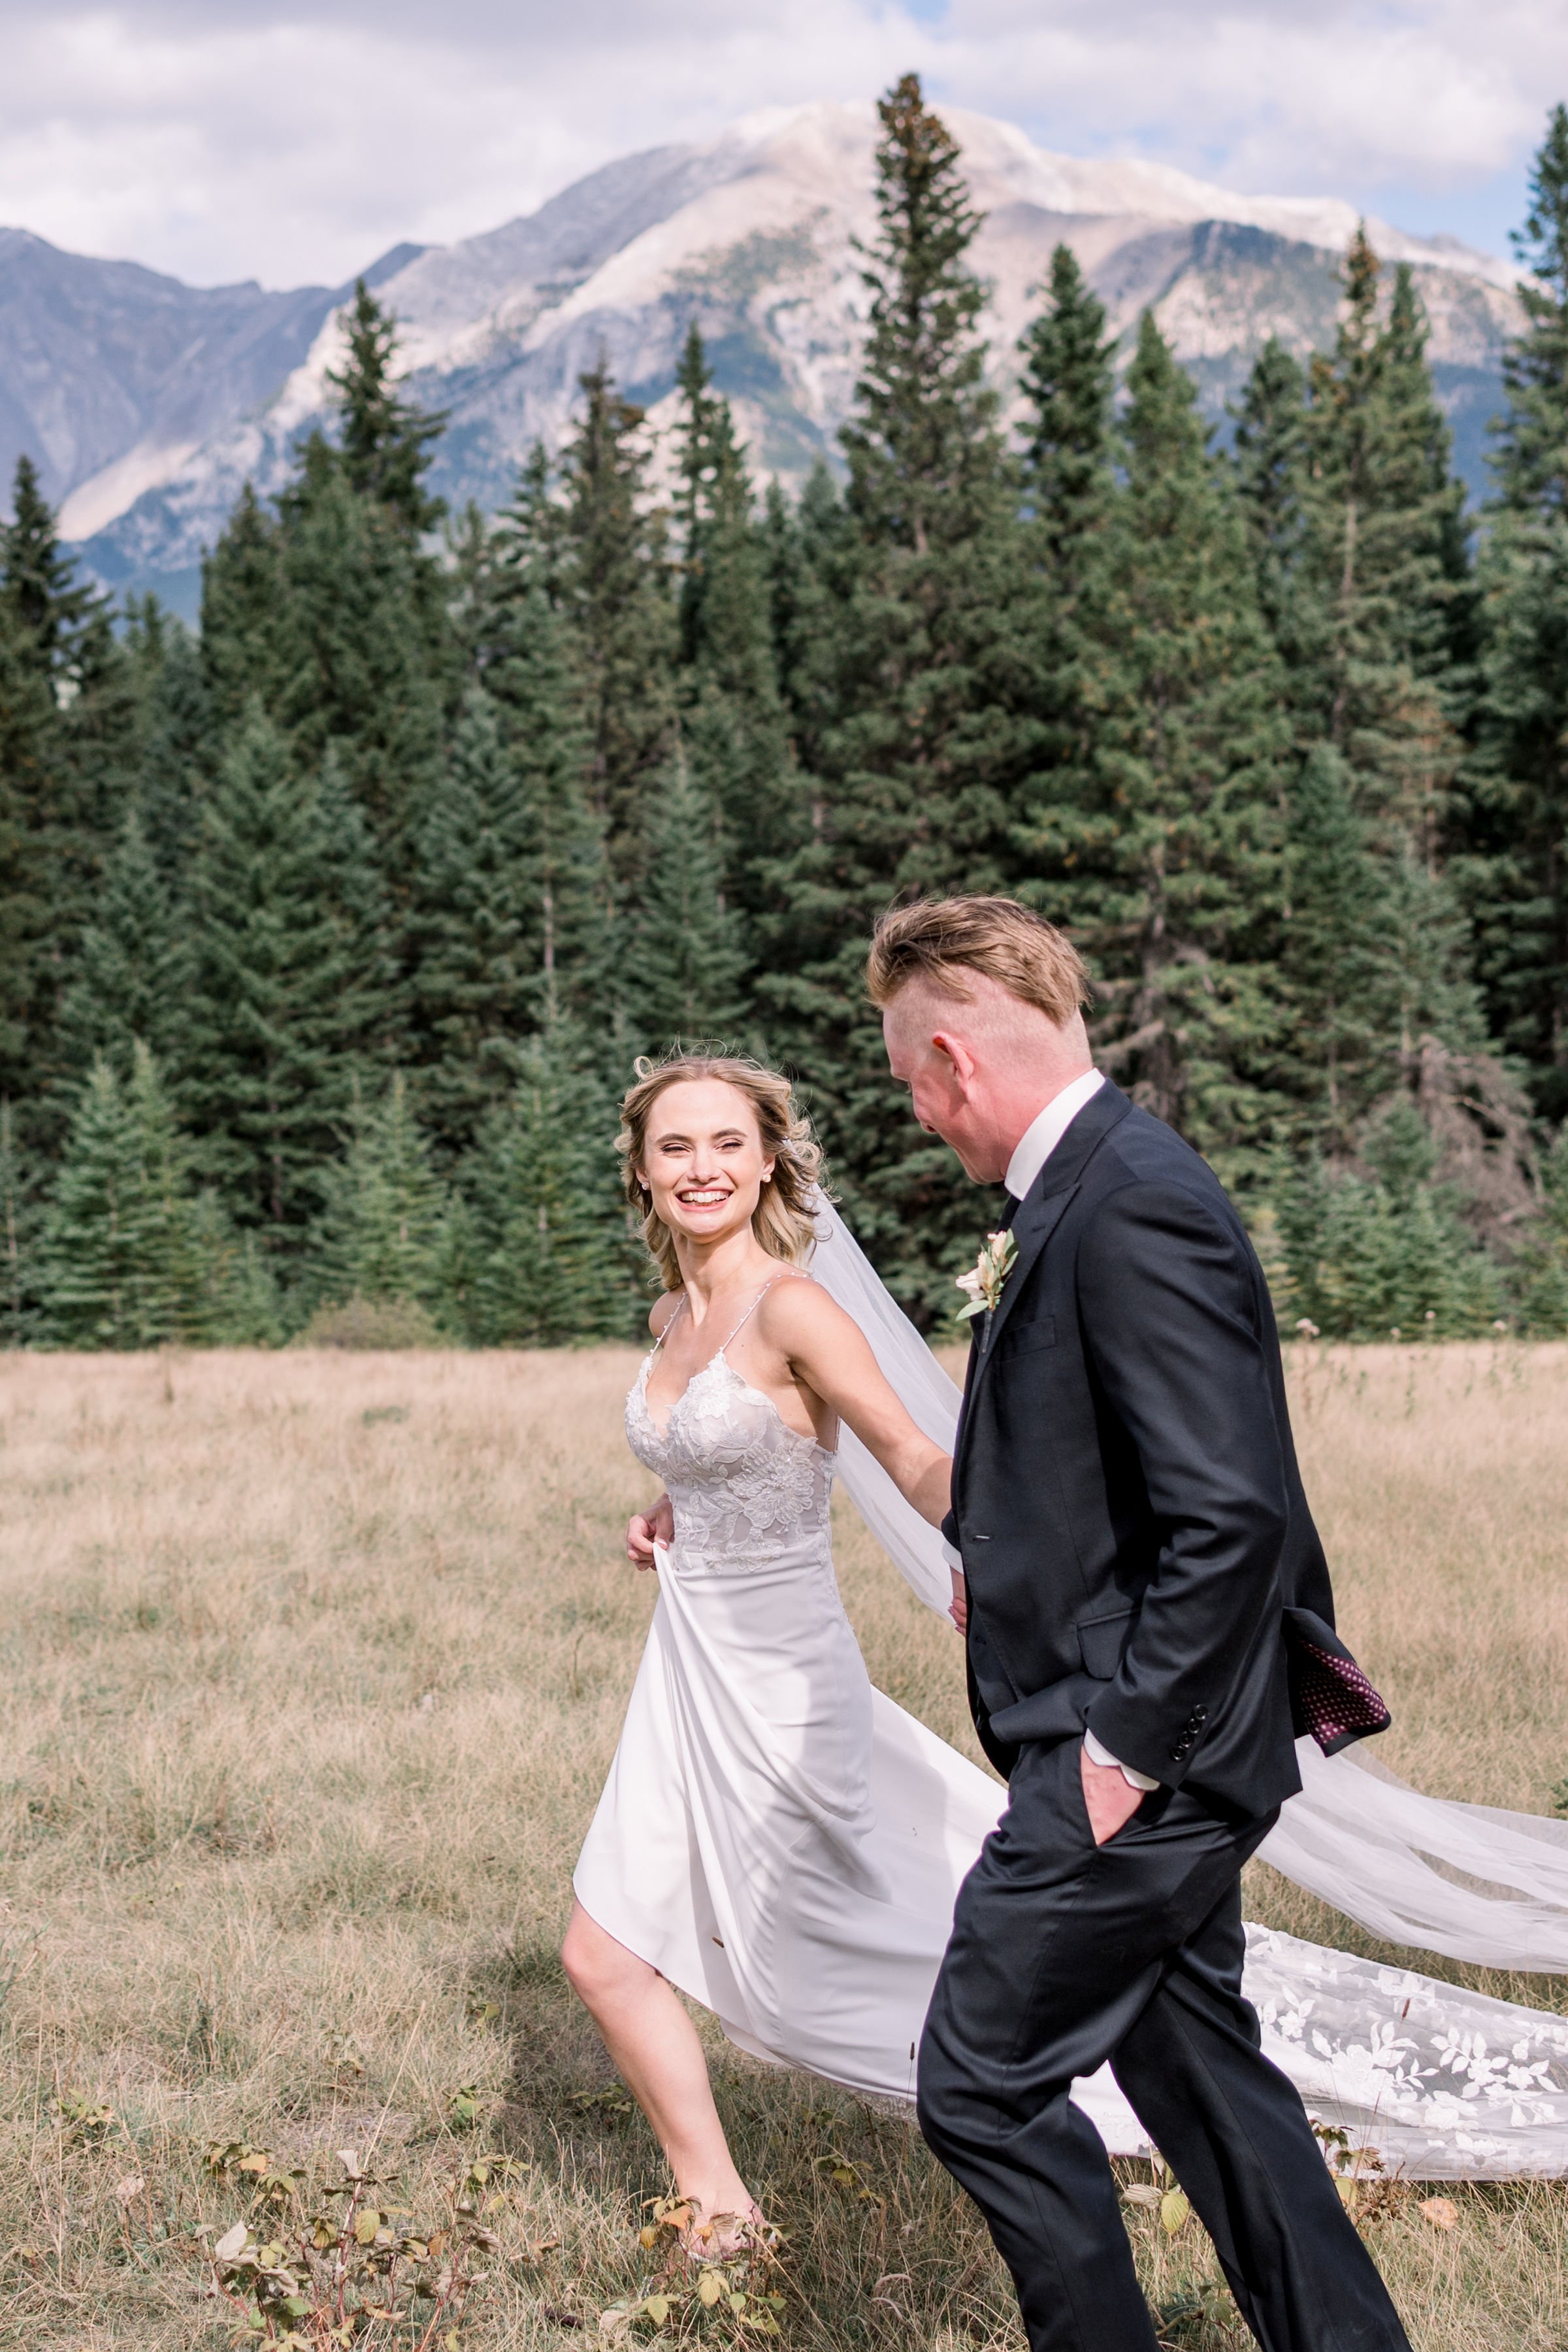  With pine trees behind them, a bride and groom run through a field by Chelsea Mason Photography. Banff weddings #Albertaweddings #shesaidyes #Albertaweddingphotographers #SilvertipGolfCourse #ChelseaMasonPhotography #ChelseaMasonWeddings  